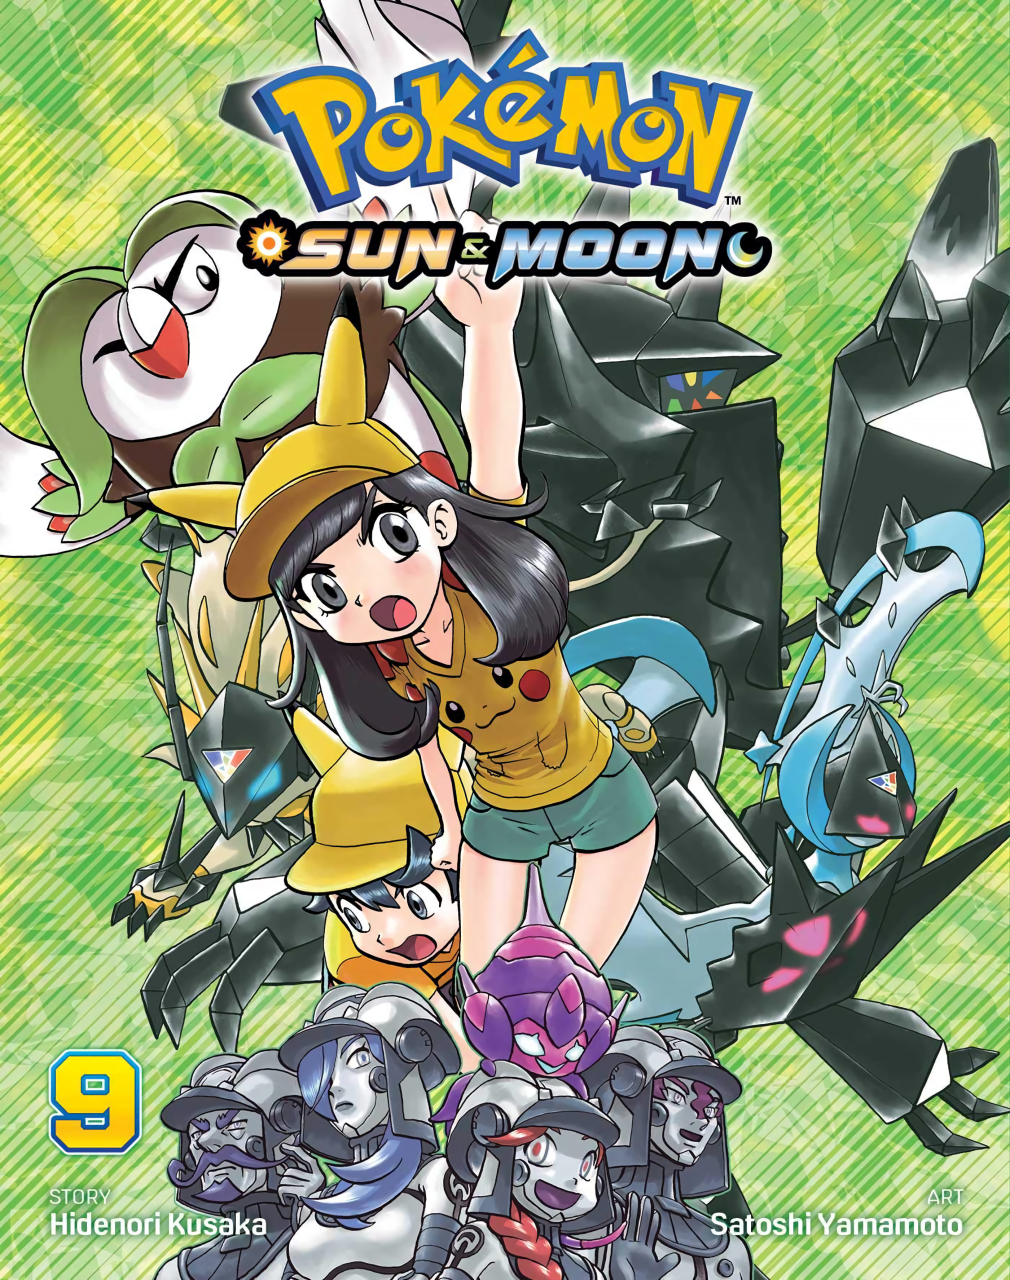 pok-mon-sun-moon-volume-9-bulbapedia-the-community-driven-pok-mon-encyclopedia